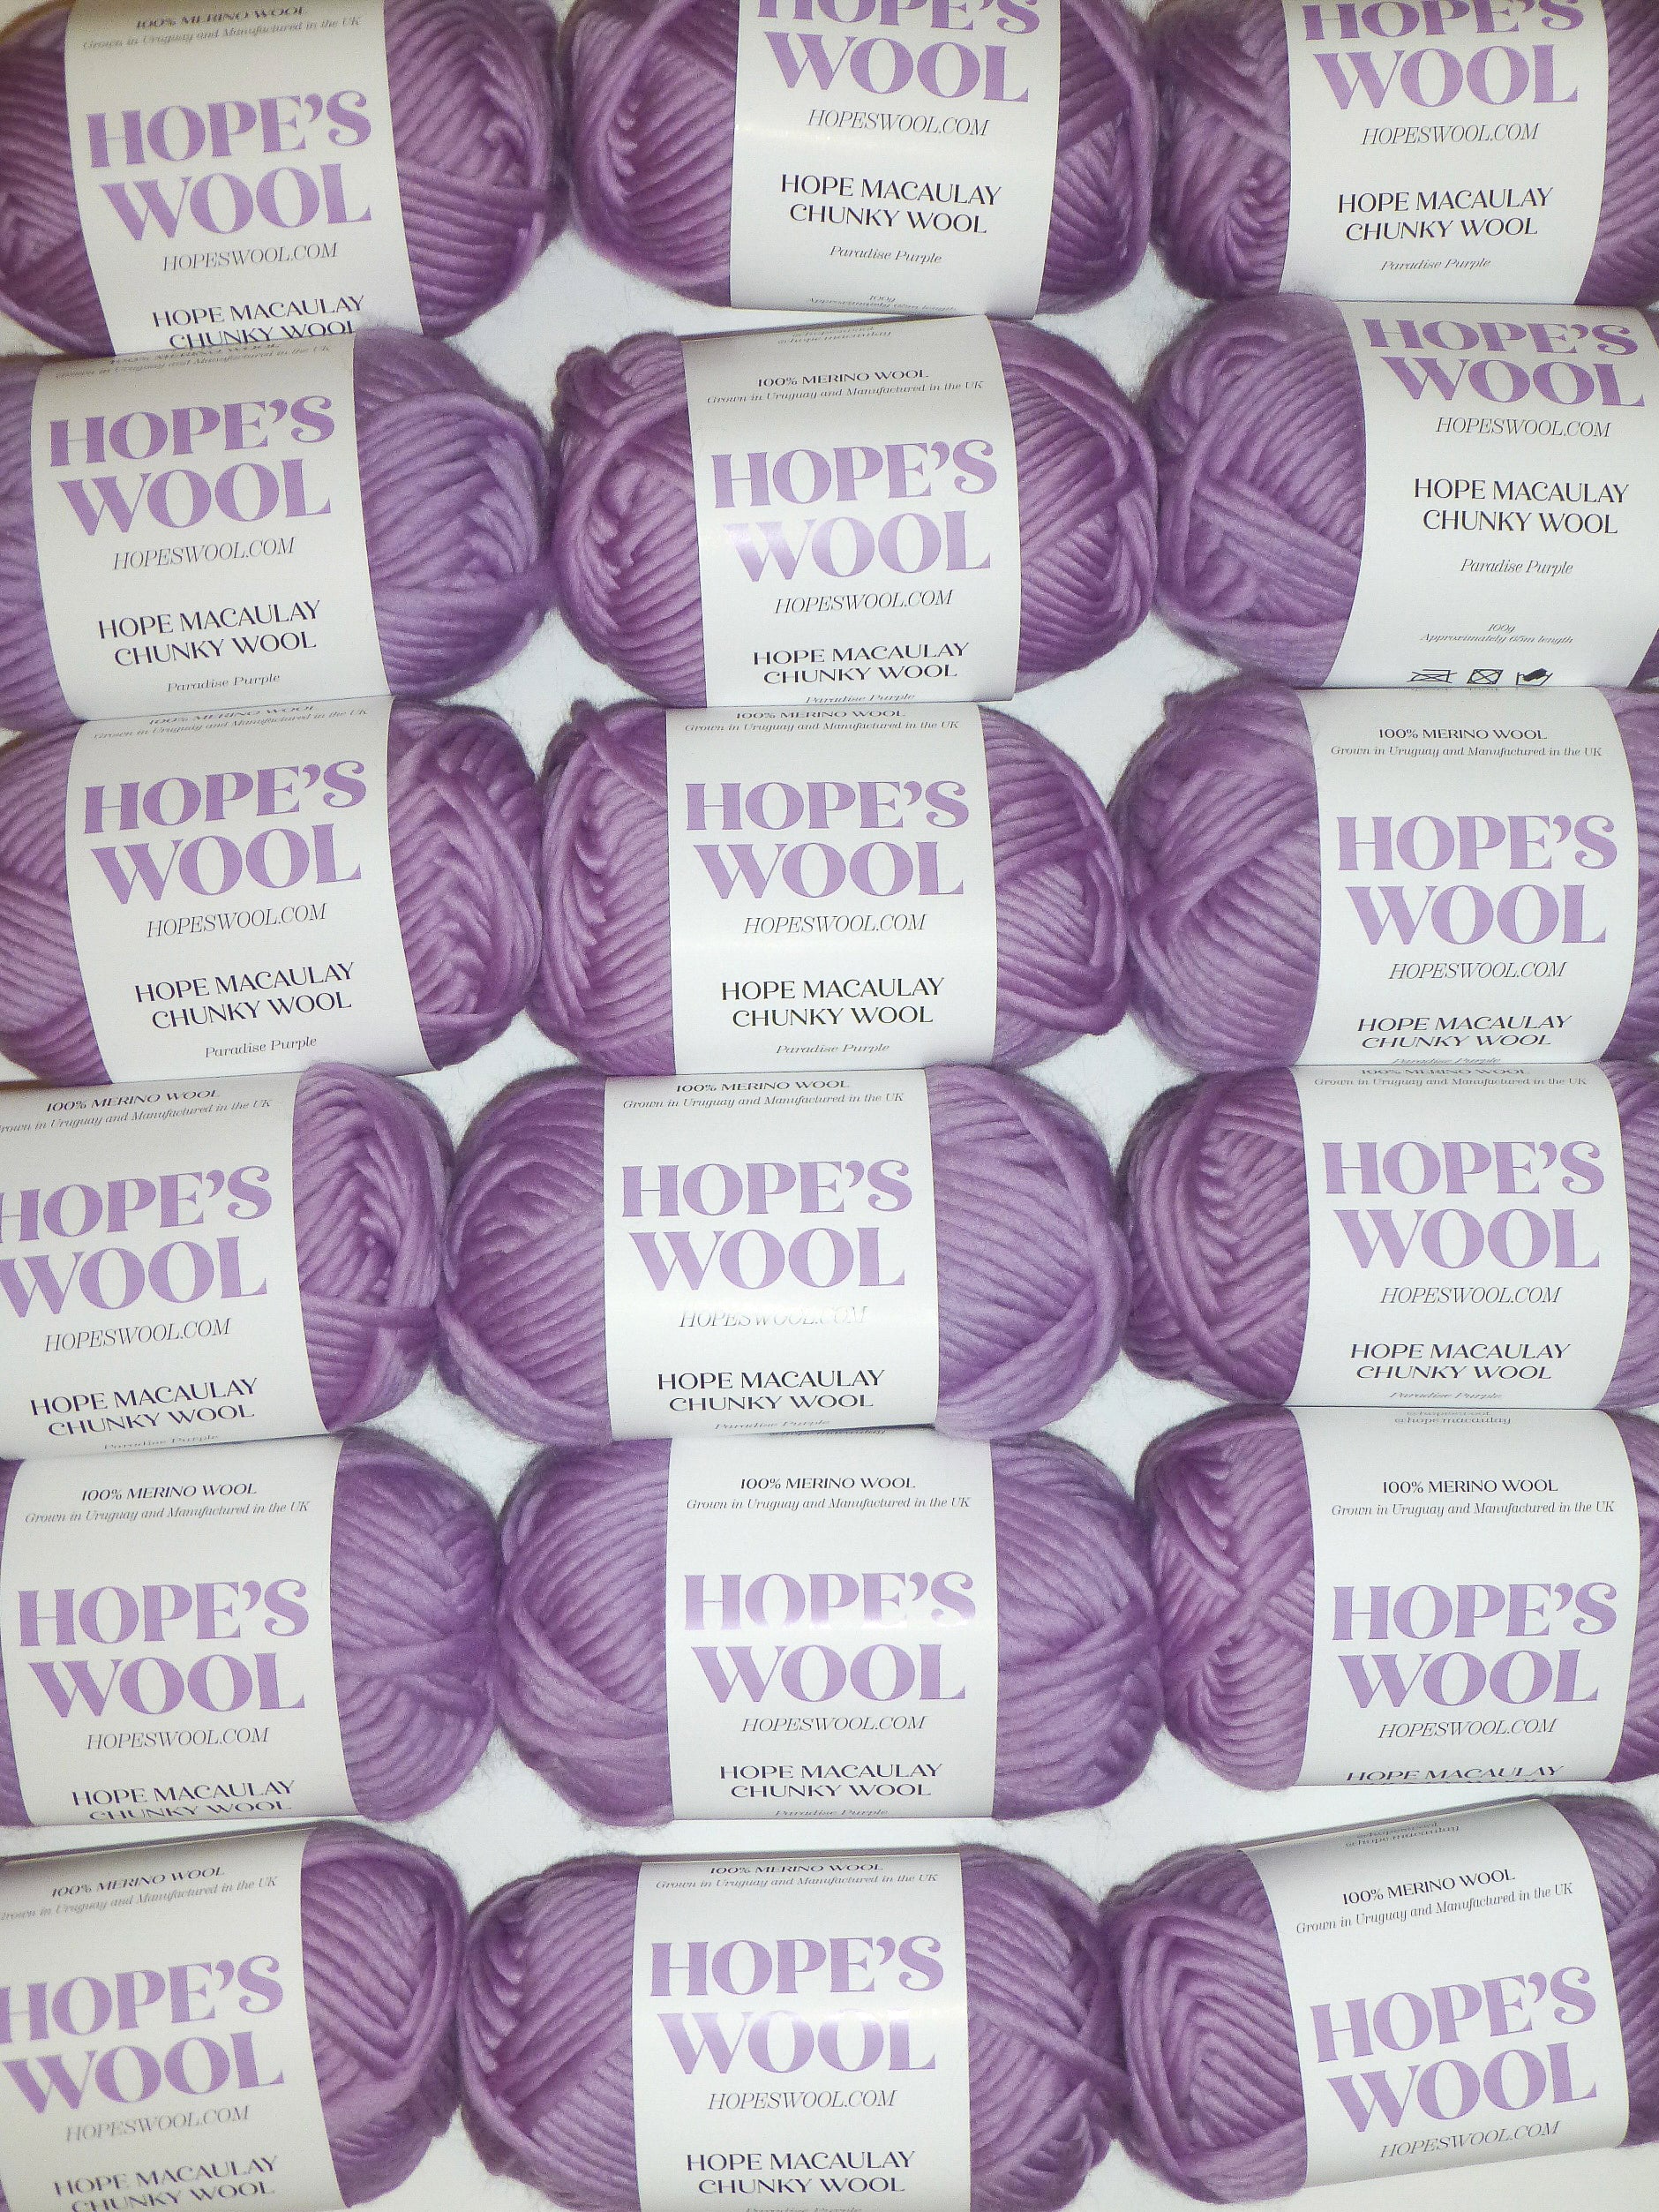 Hope Macaulay Chunky Wool in Paradise Purple